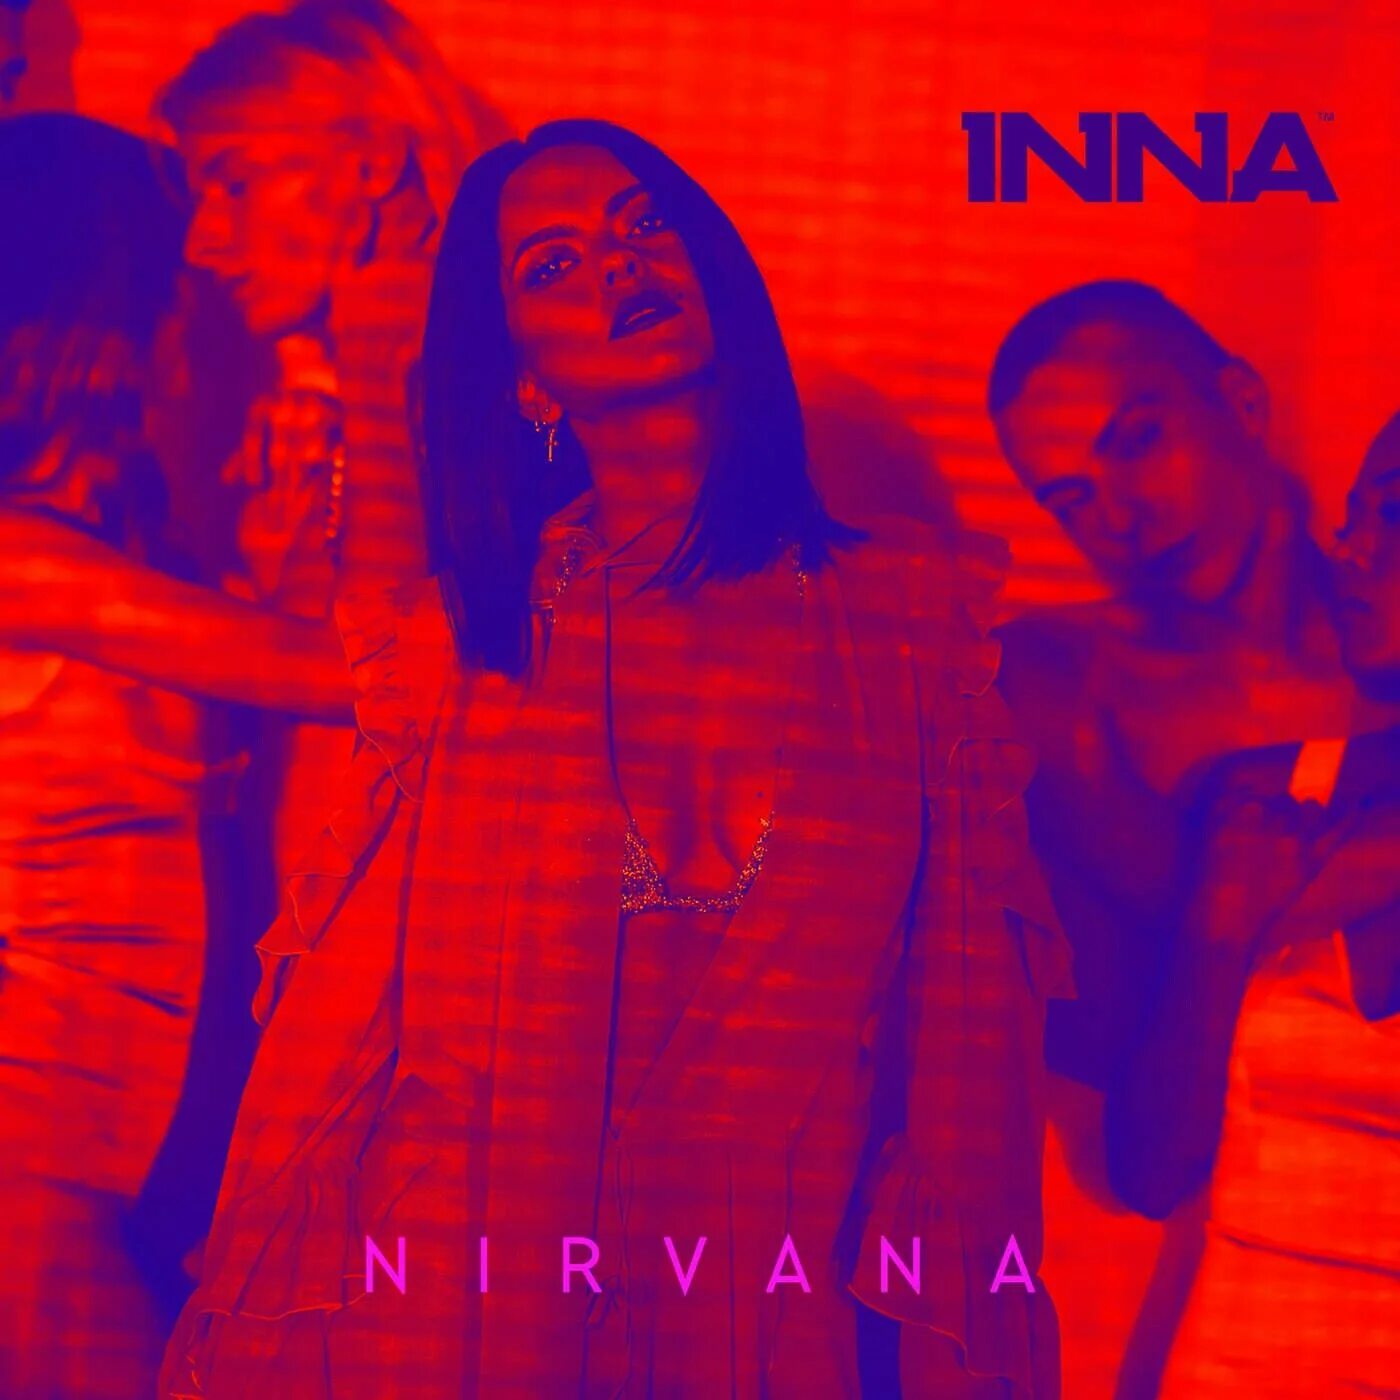 Inna nirvana. Inna Nirvana обложка. Inna - (2017) - Nirvana. Сингл Нирвана.